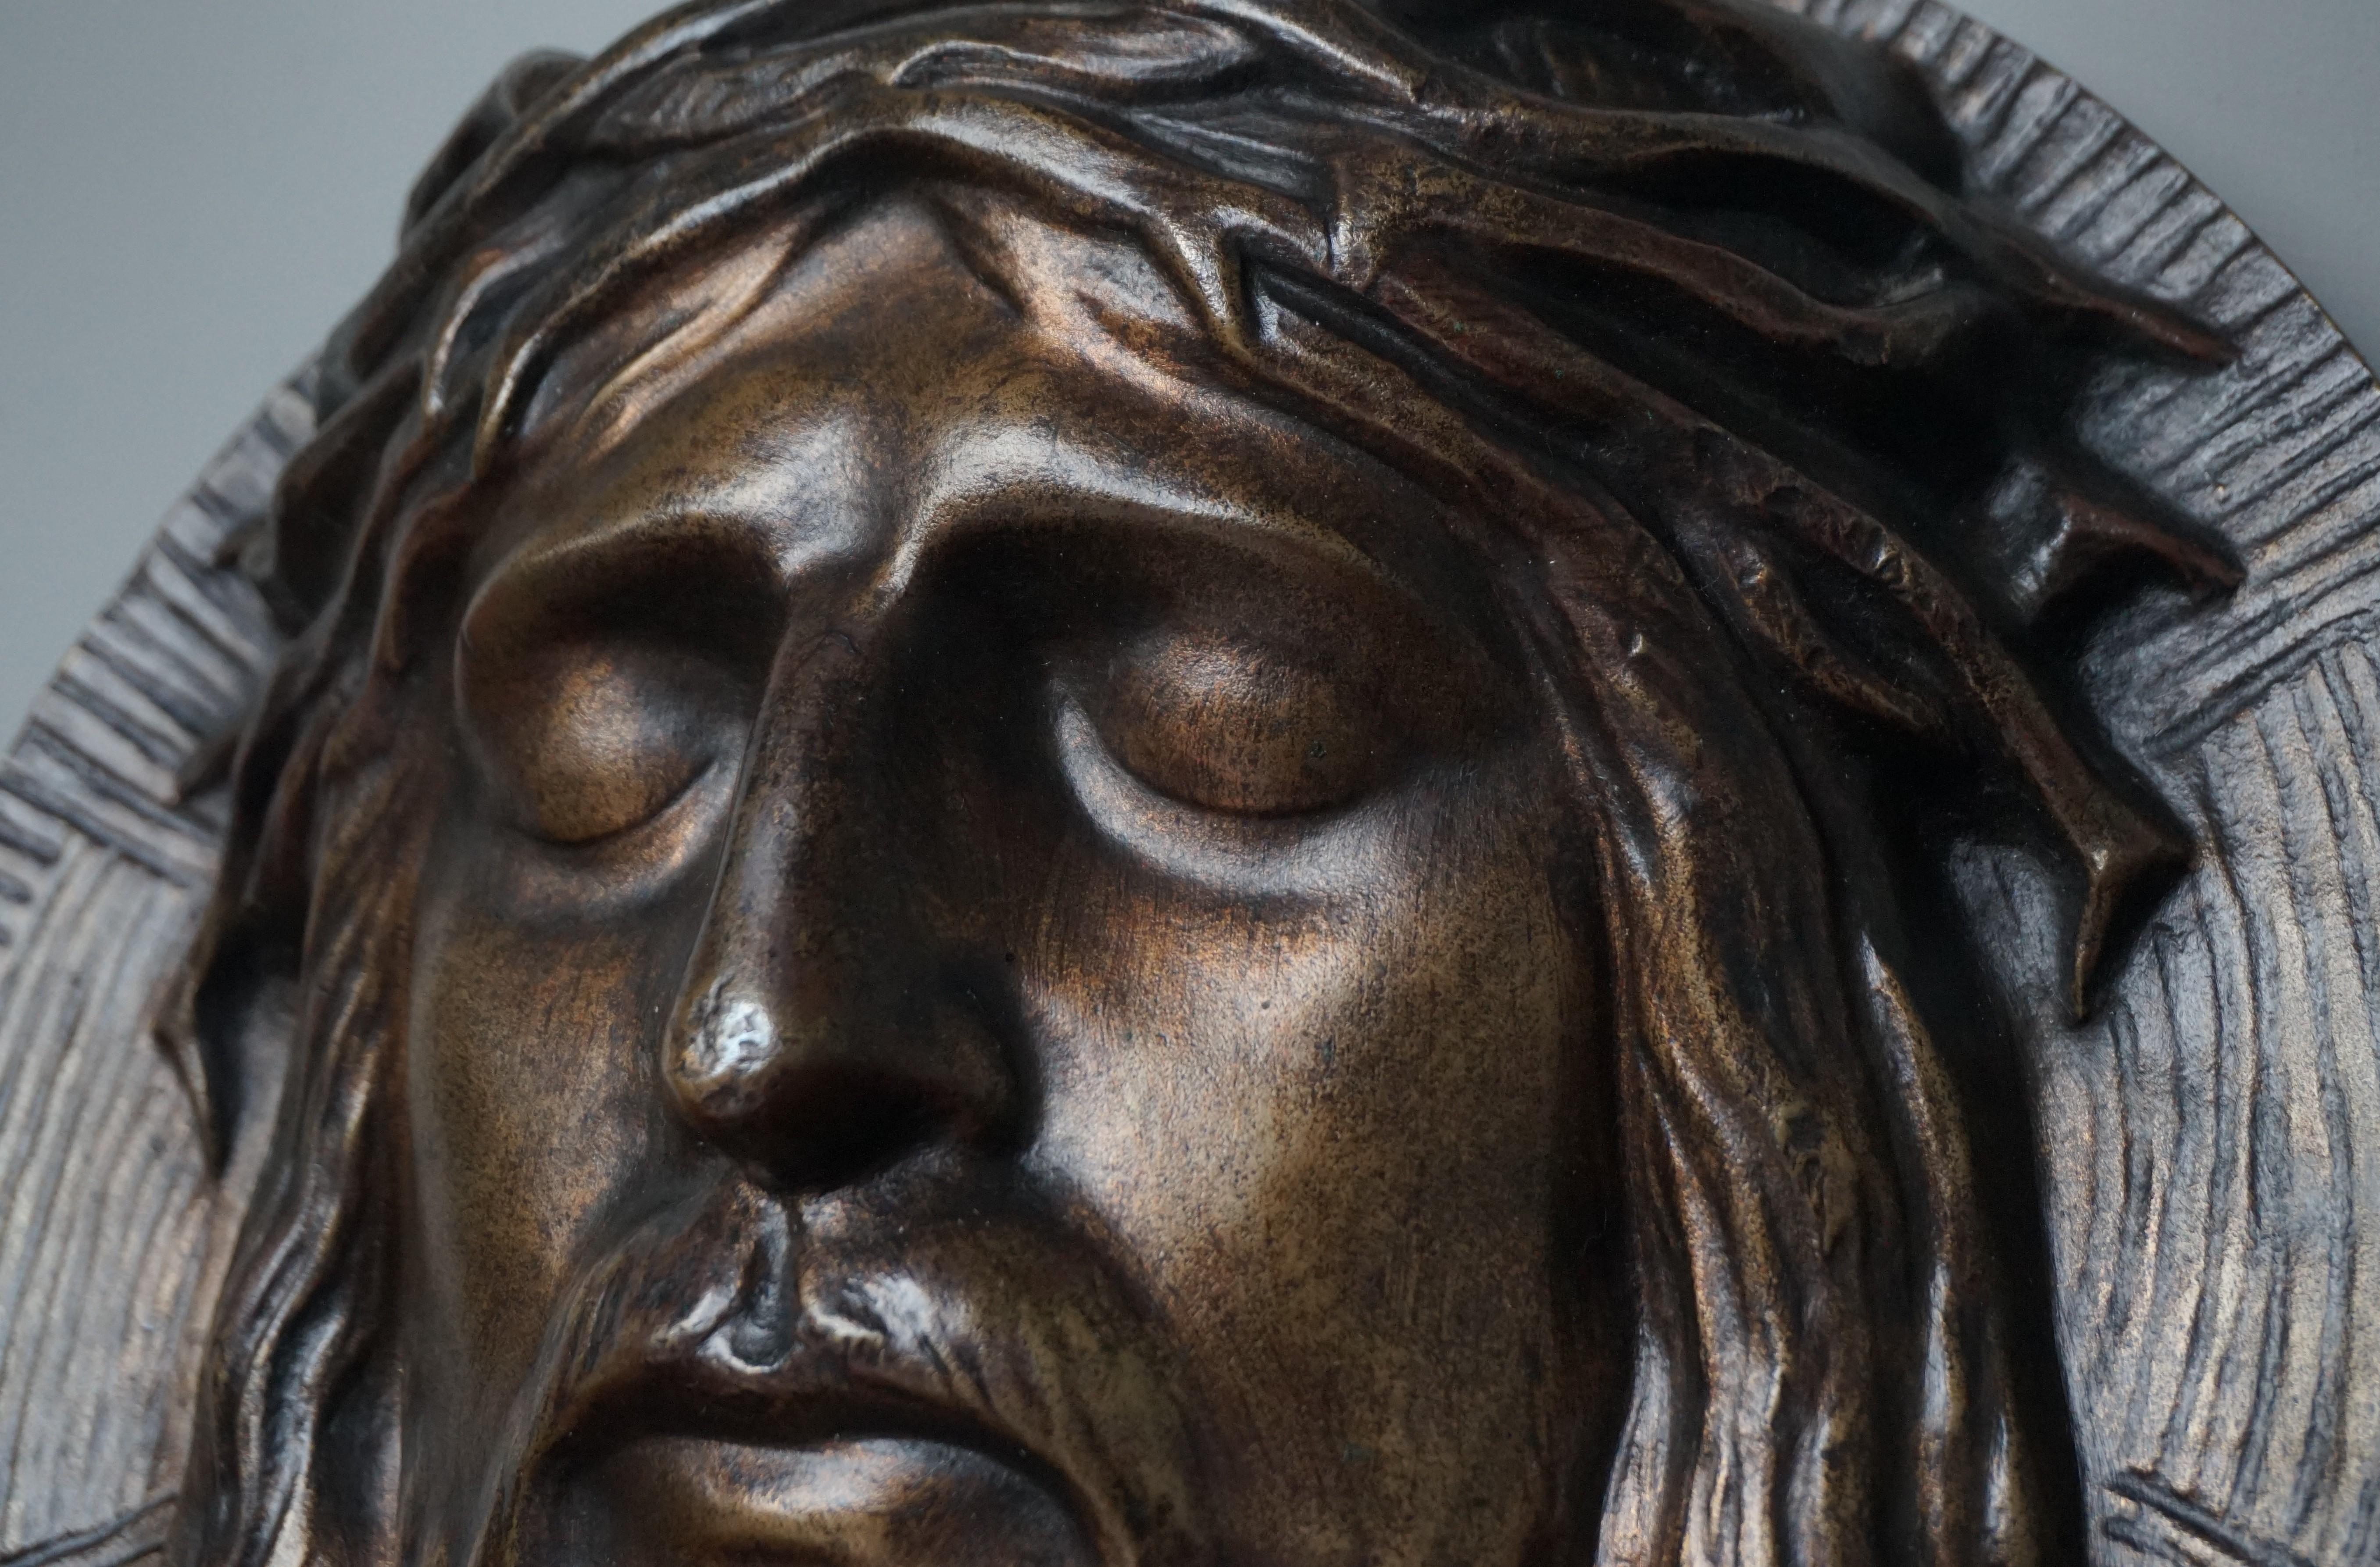 jesus christ face sculpture